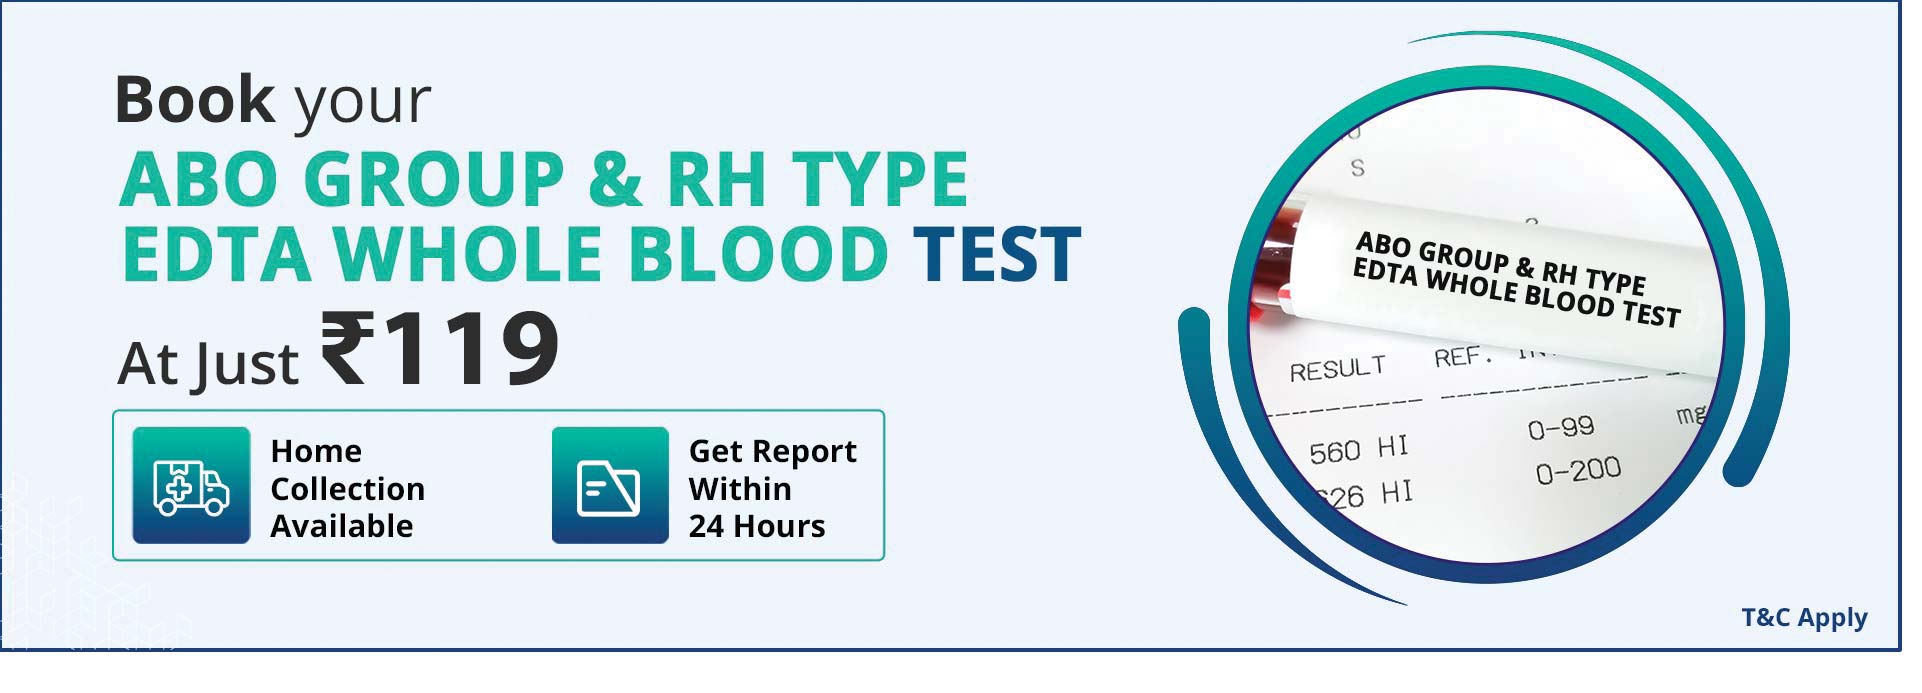 ABO Group & RH Type Edta Whole Blood Test